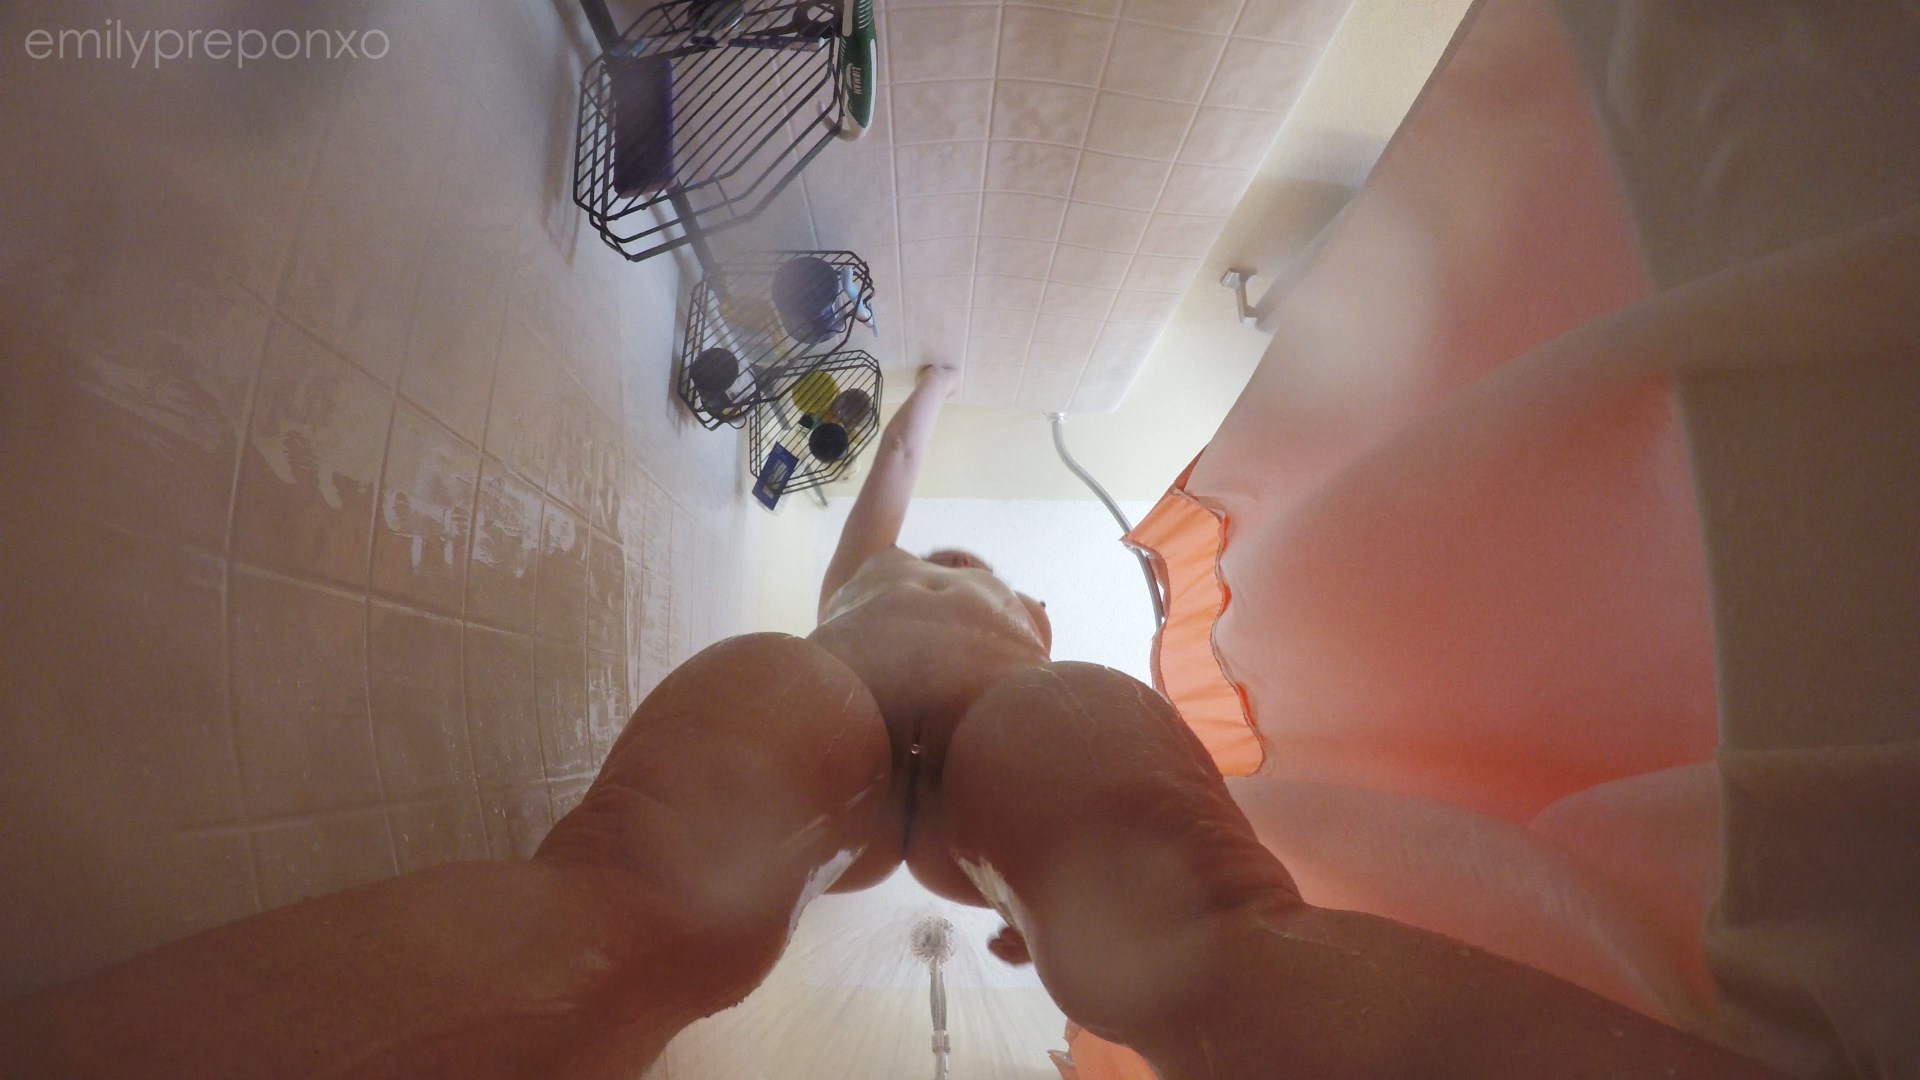 EmilyPreponXO - Consume My Dirty Shower Water 1080p